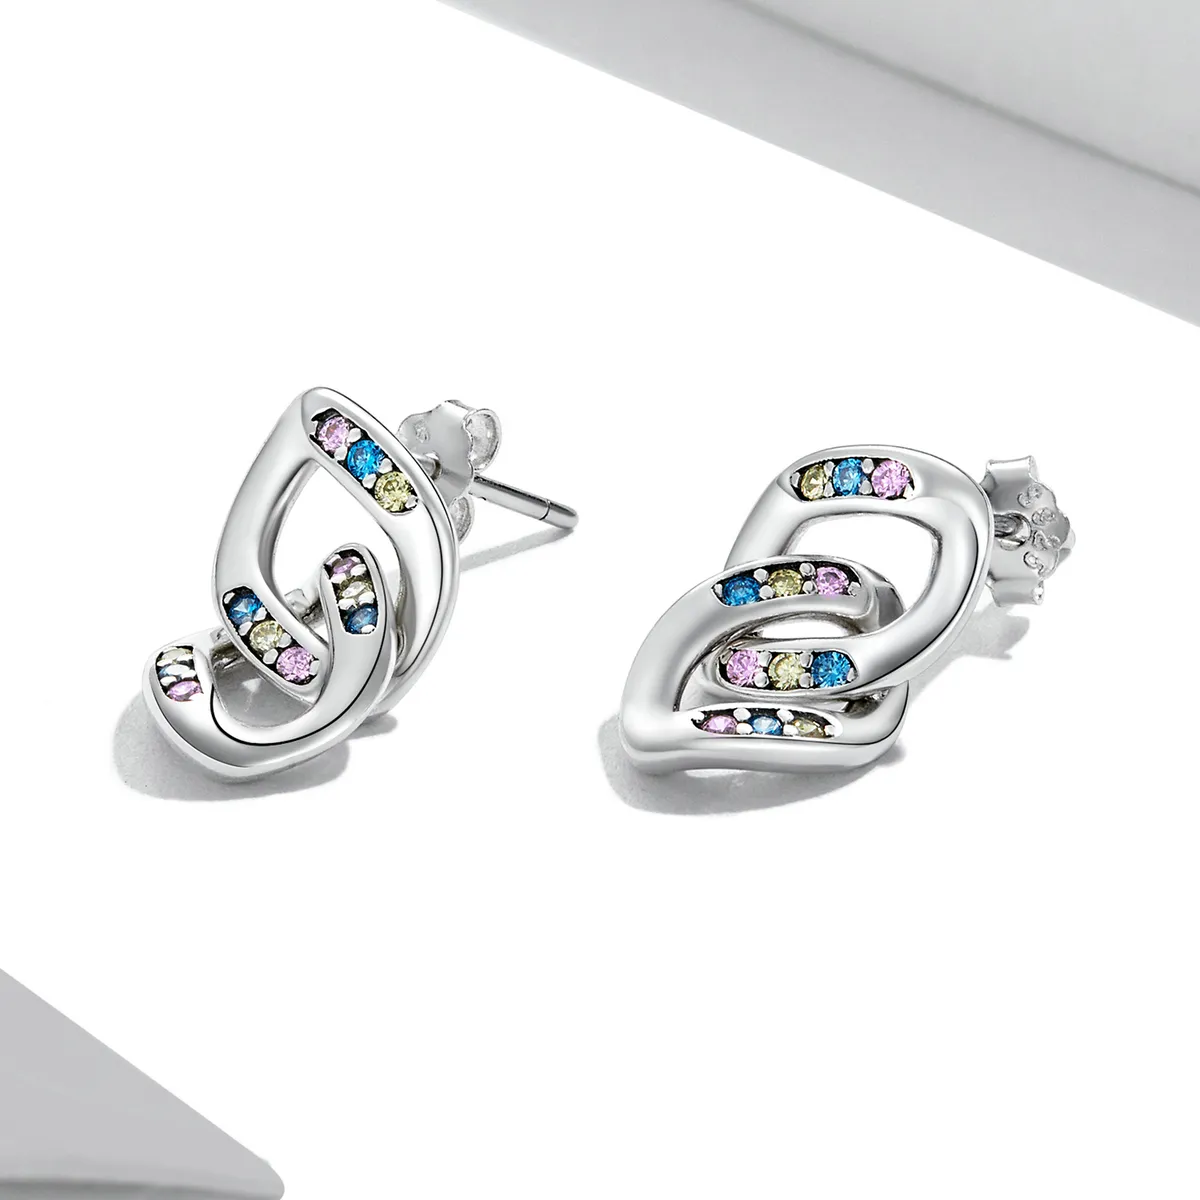 Pandora Style Double Chain Hanging Earrings - SCE1377